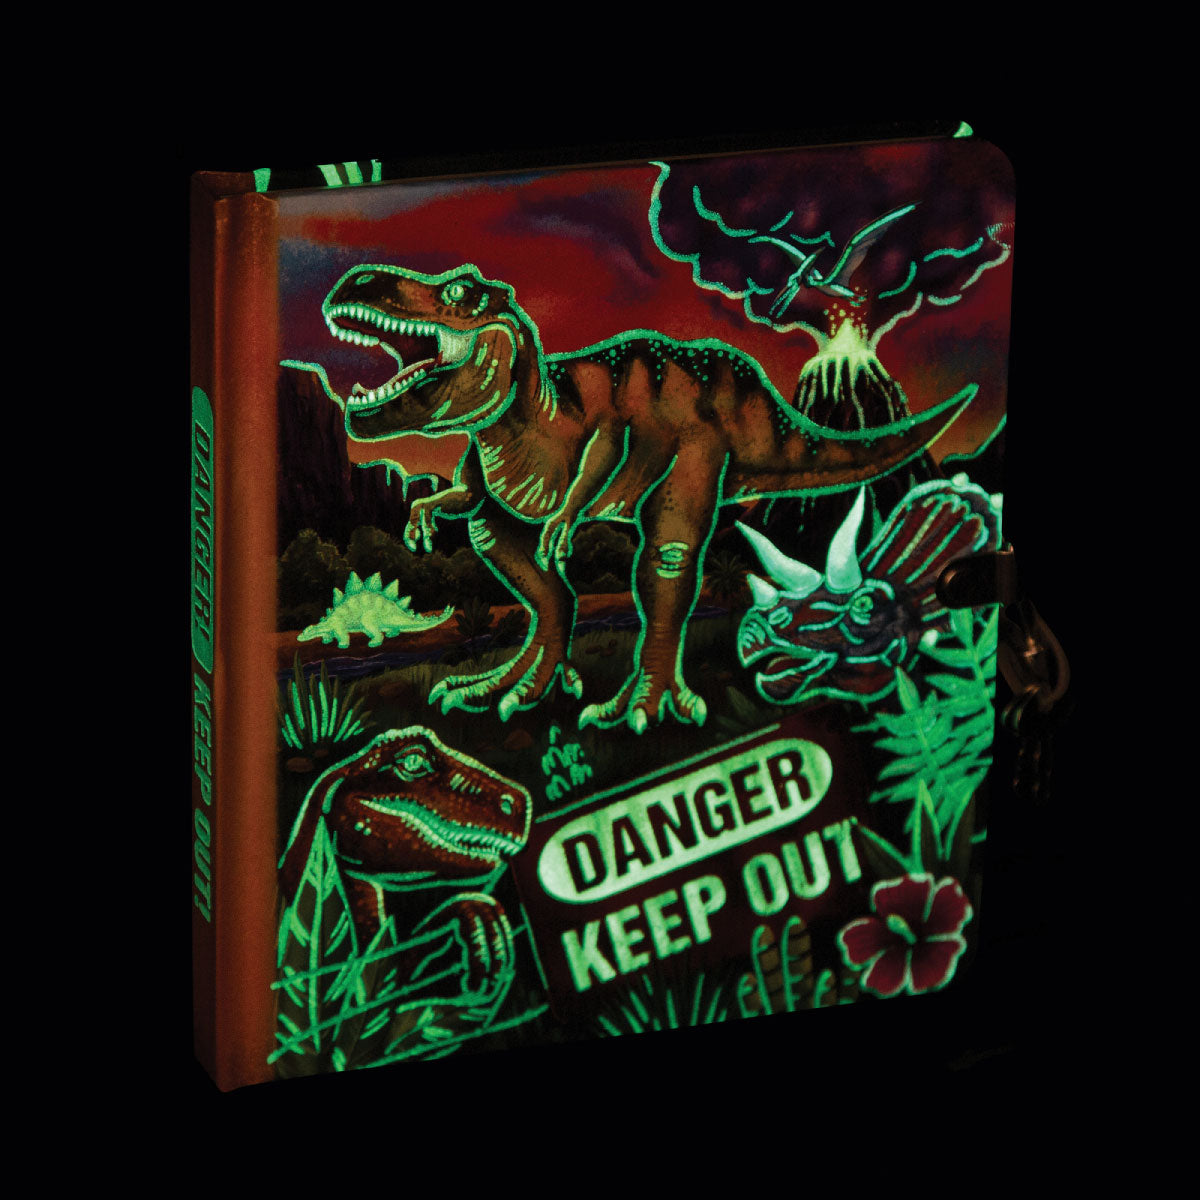 Peaceable Kingdom Glow-in-the-Dark Dinosaur Lock and Key Diary